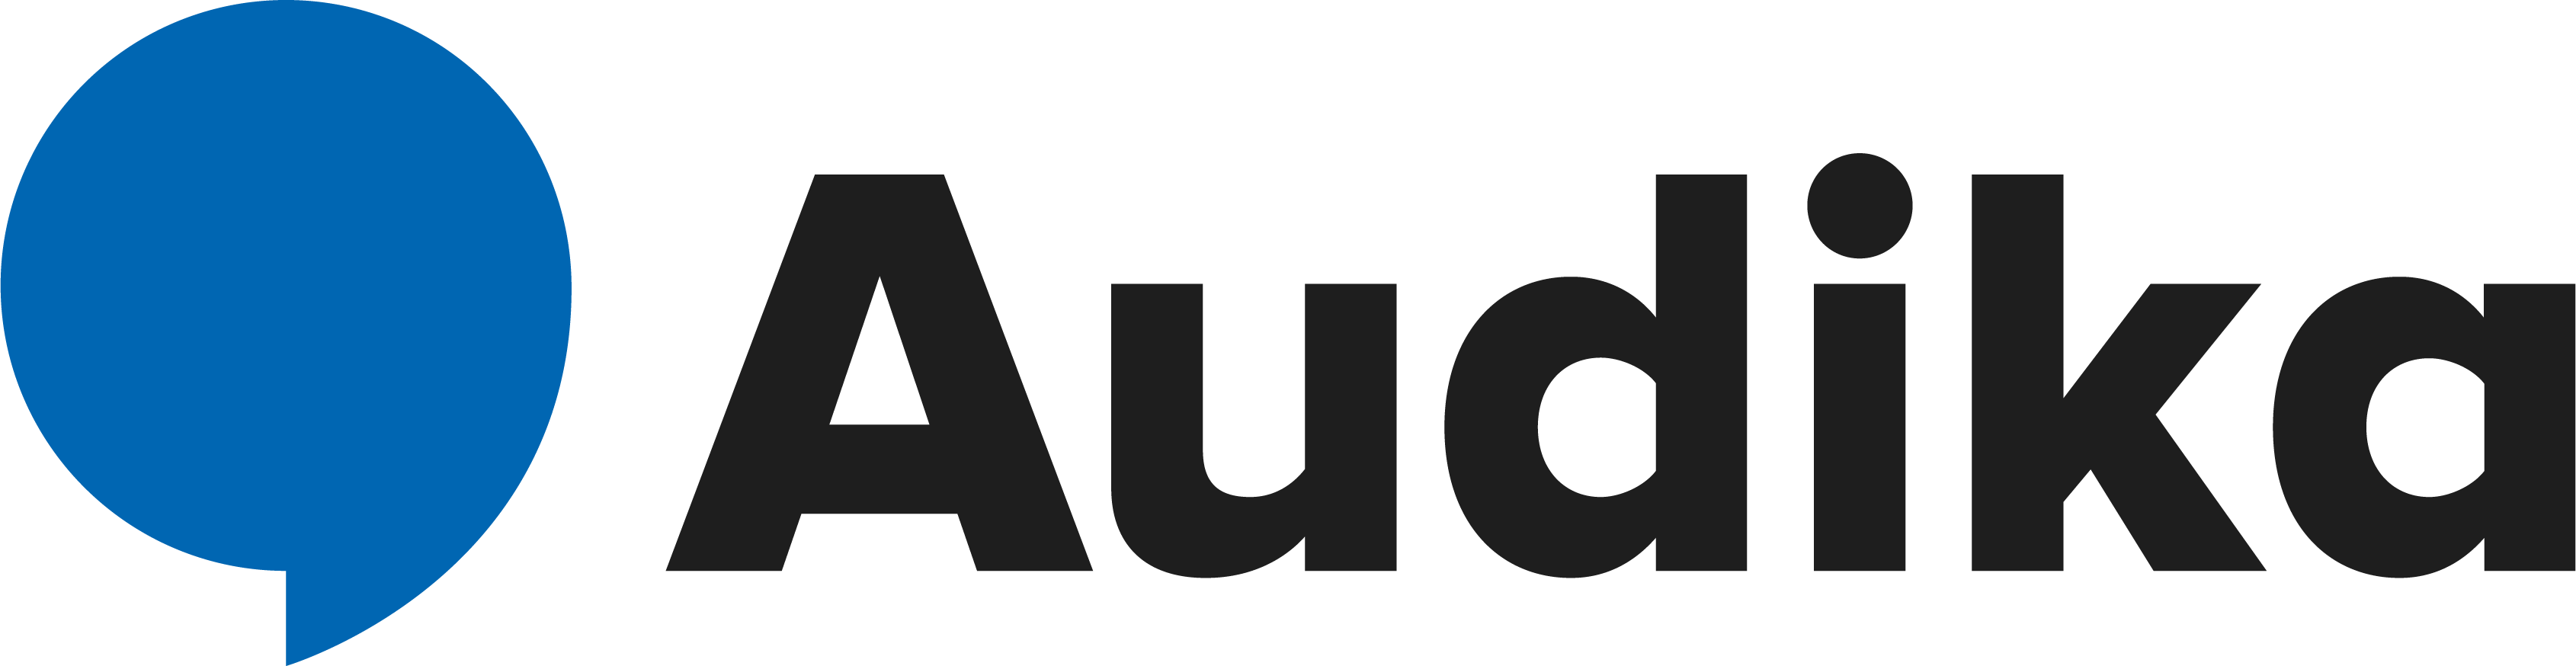 logo audika